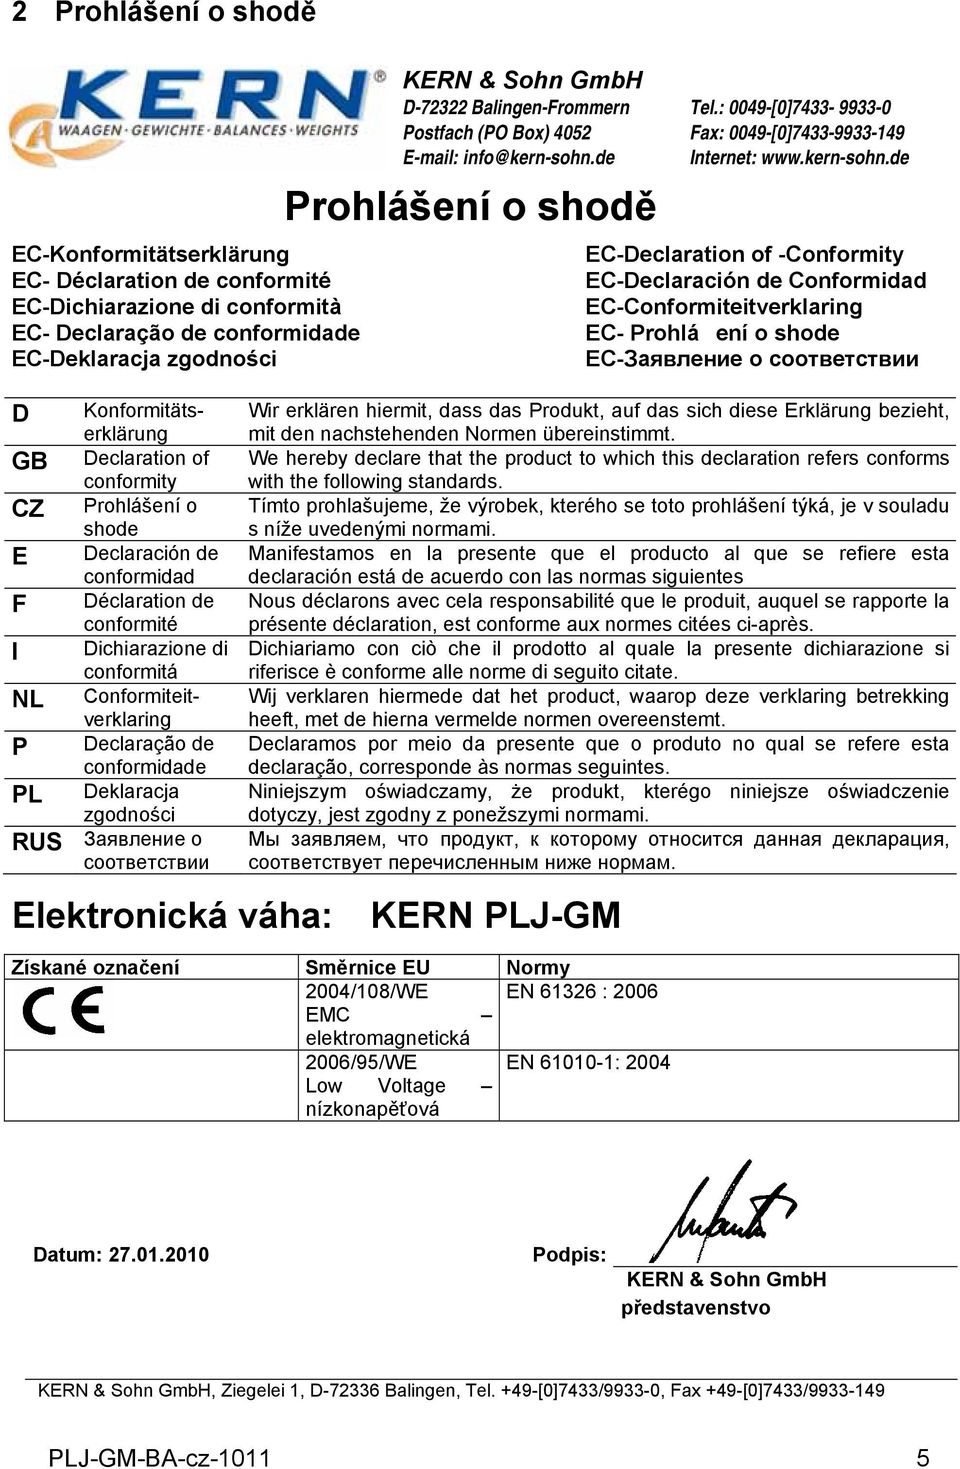 Deklaracja zgodności RUS Заявление о соответствии KERN & Sohn GmbH D-72322 Balingen-rommern Postfach (PO Box) 4052 E-mail: info@kern-sohnde Prohlášení o shodě Tel: 0049-[0]7433-9933-0 ax: